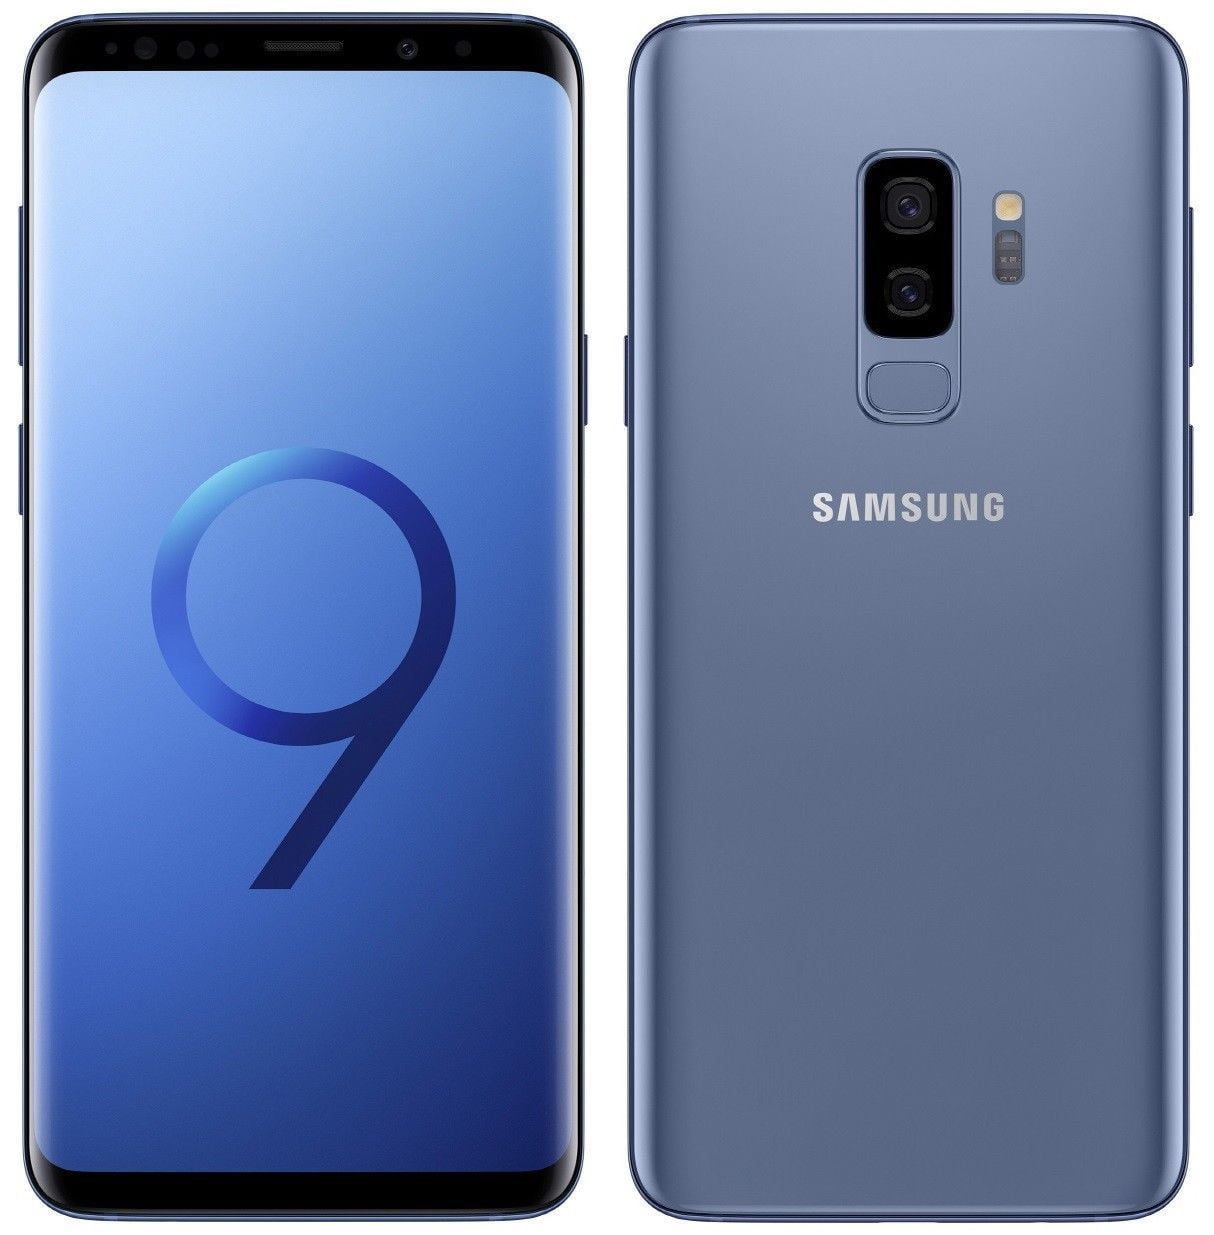 SAMSUNG Galaxy S9 Unlocked, 64GB, Coral Blue (Refurbished)